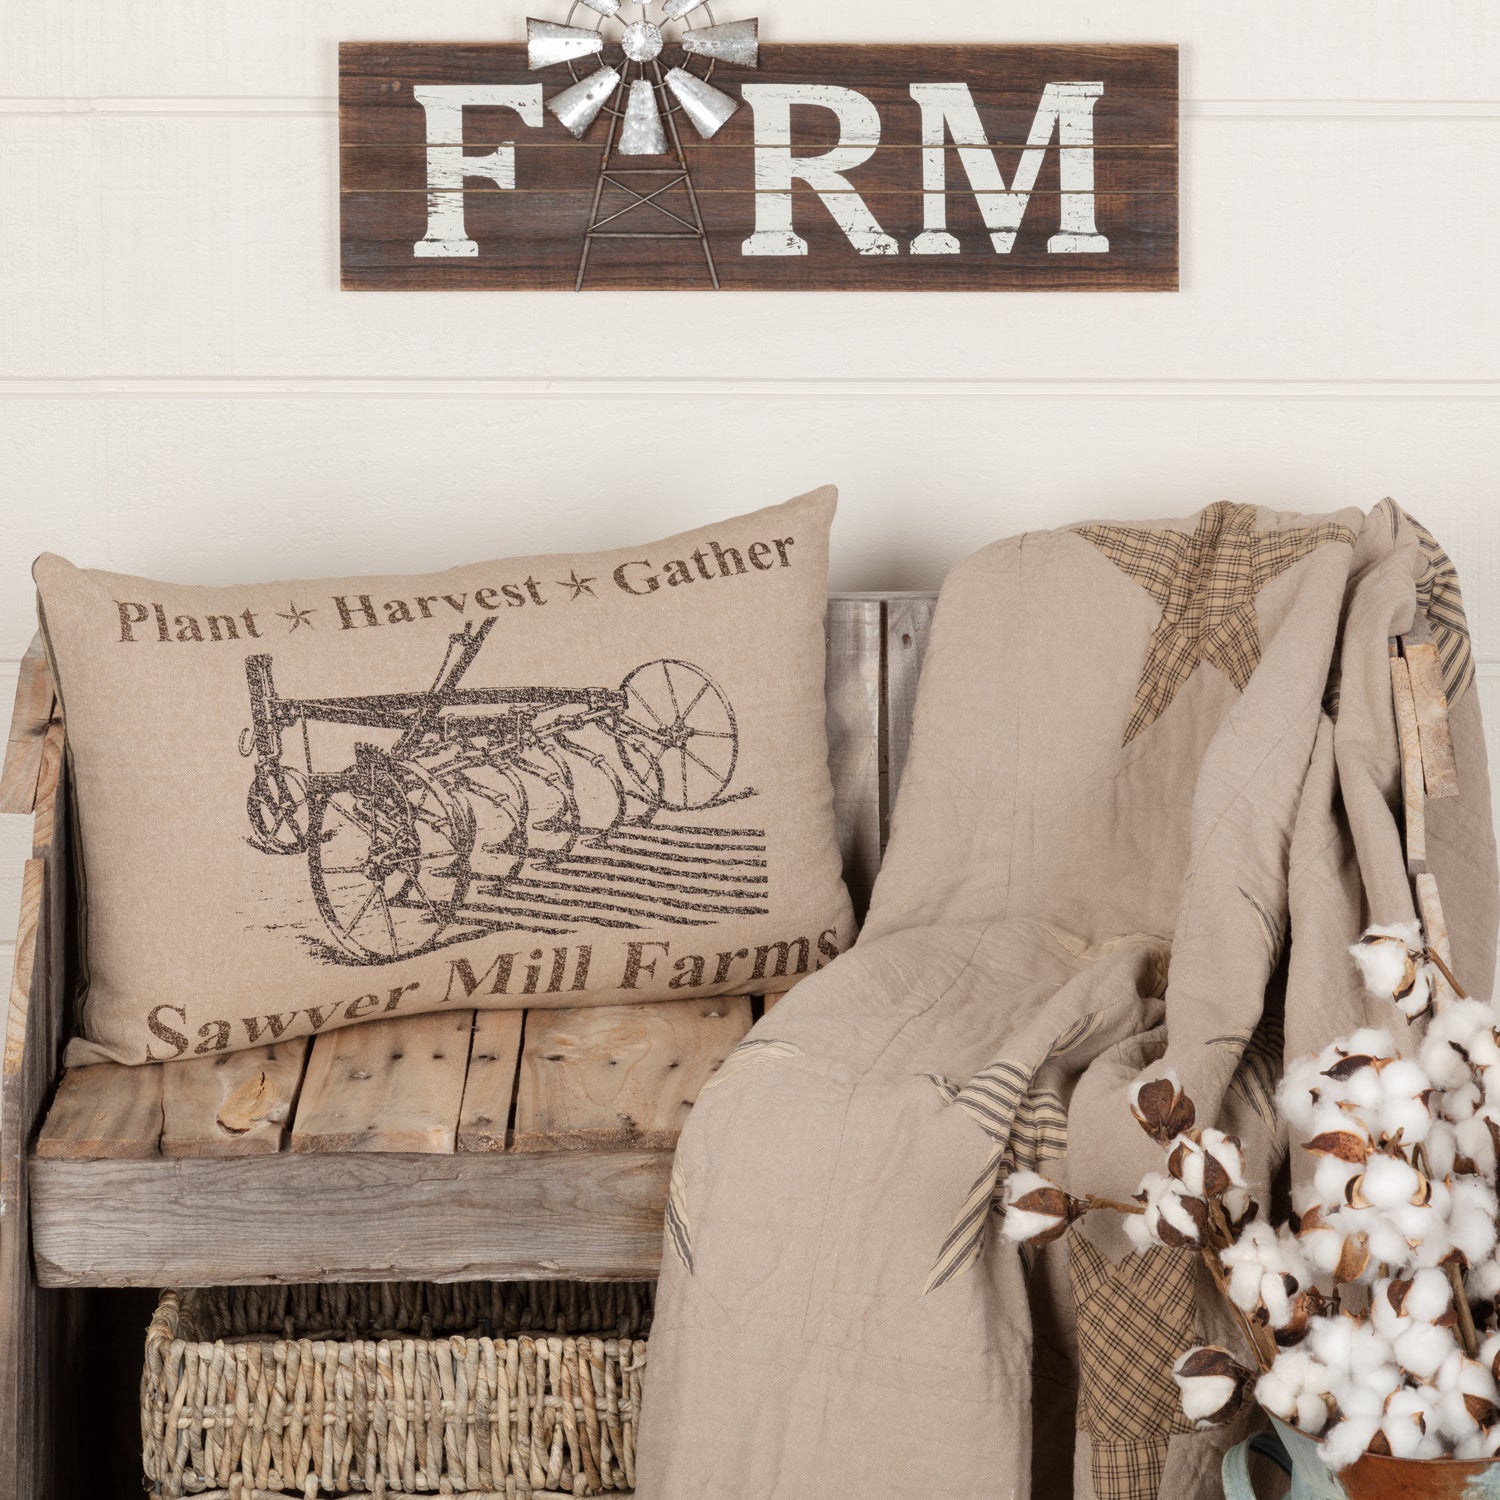 Sawyer Mill Farmhouse 14 x 22 Pillow, Brown